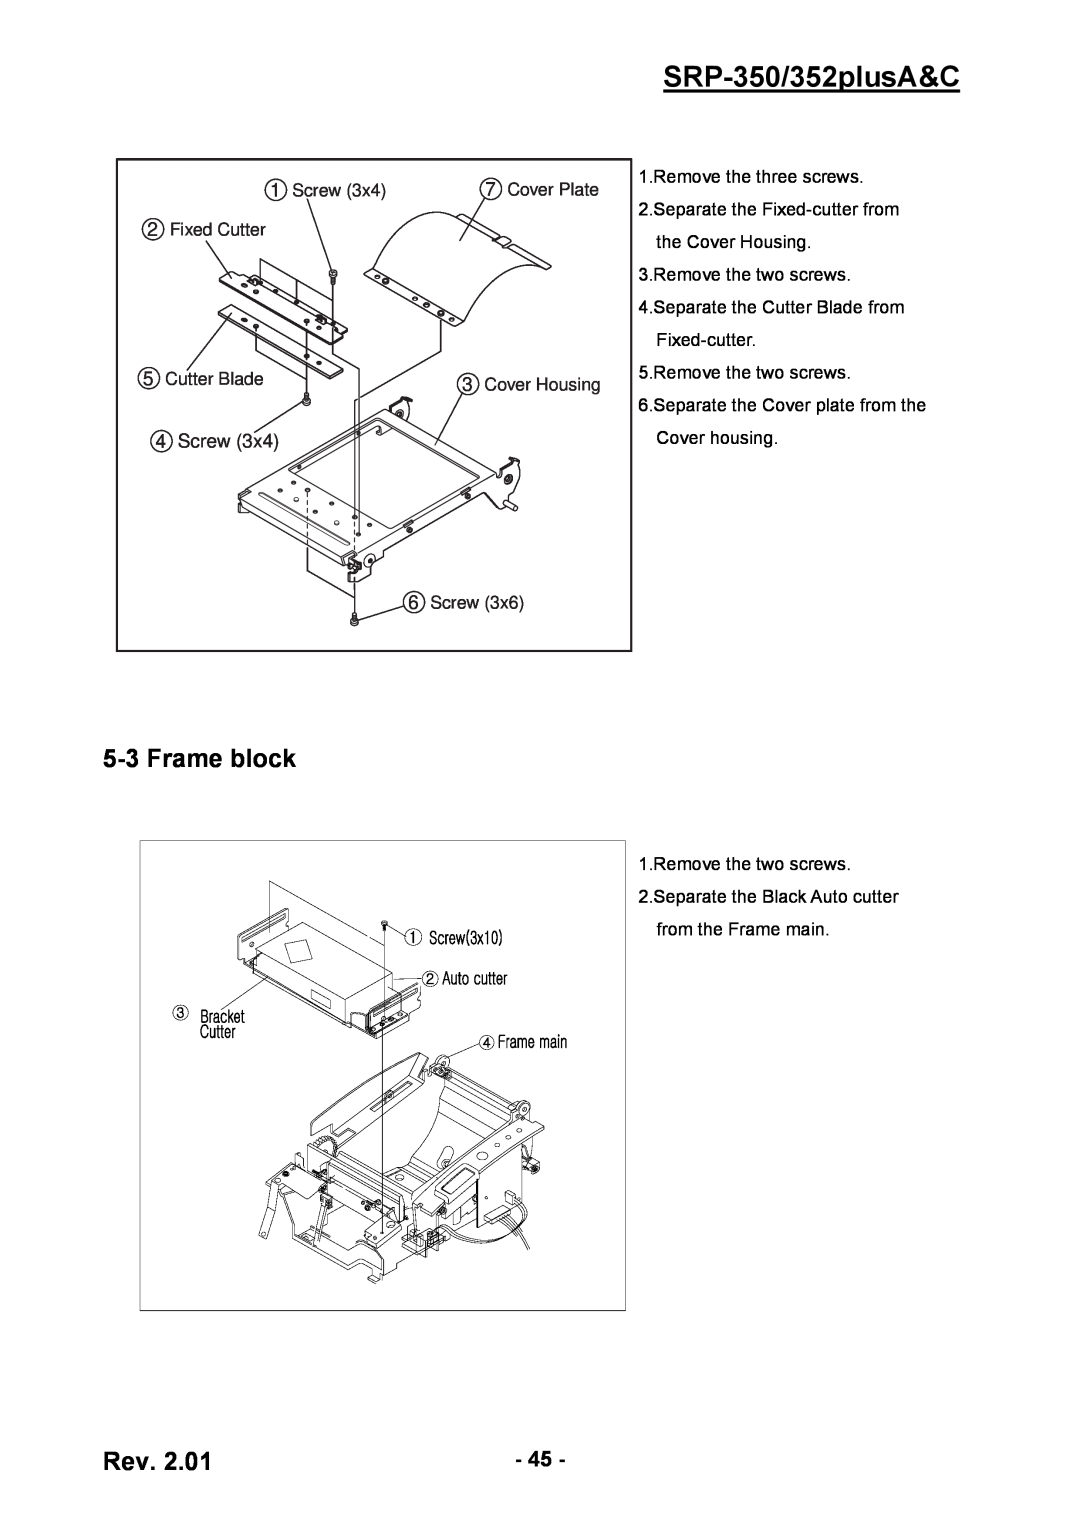 BIXOLON service manual Frame block, SRP-350/352plusA&C, Screw, Cover Plate, Fixed Cutter, Cutter Blade, Cover Housing 